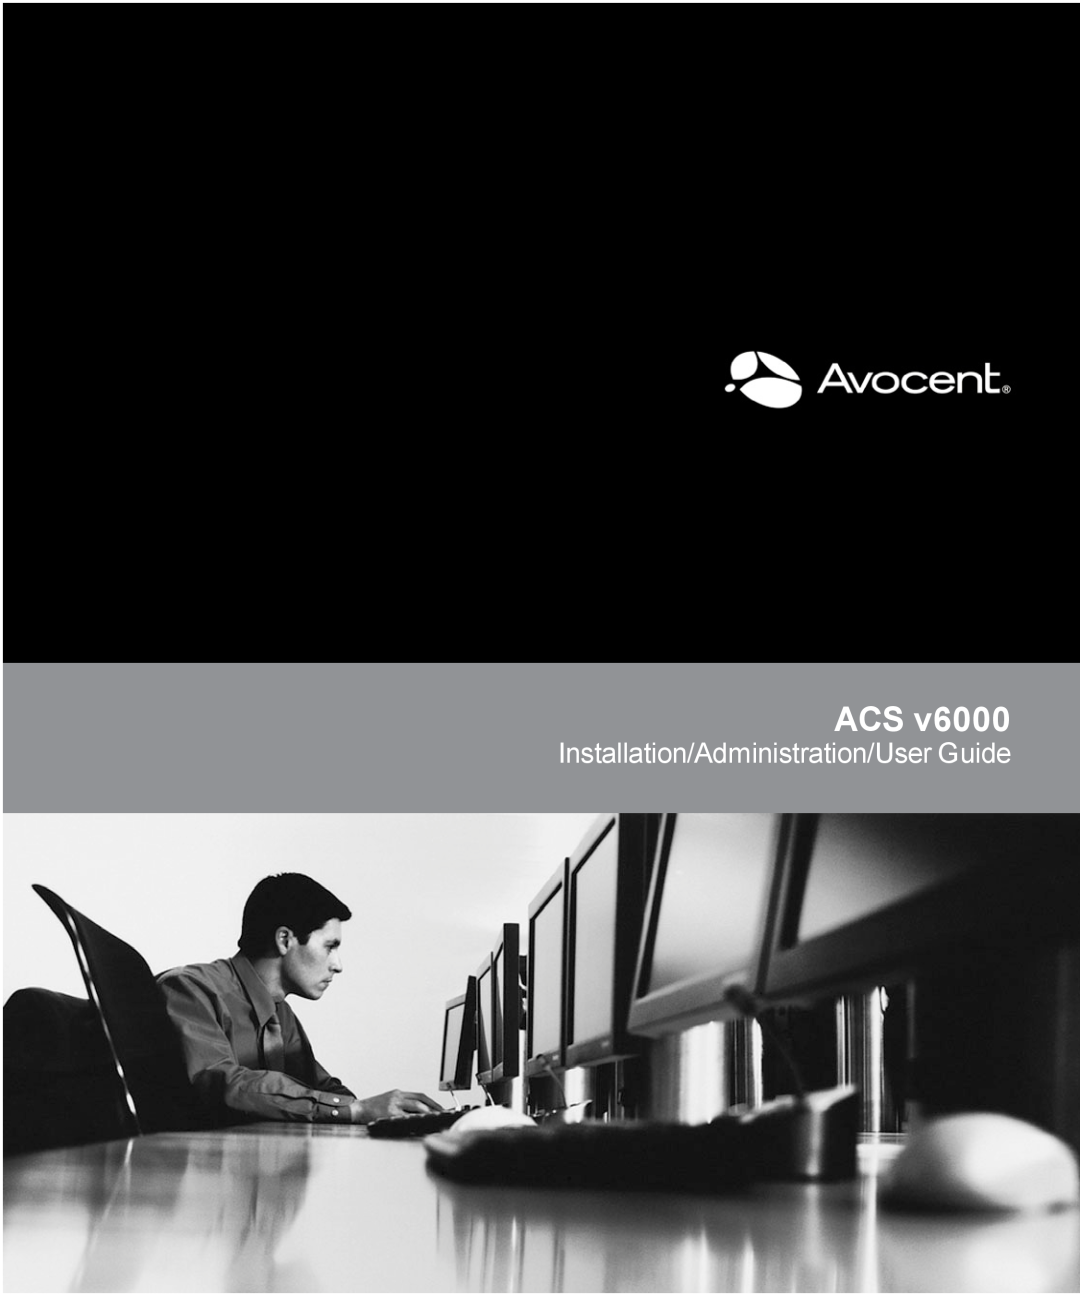 Casio ACS V6000 manual Installation/Administration/User Guide 